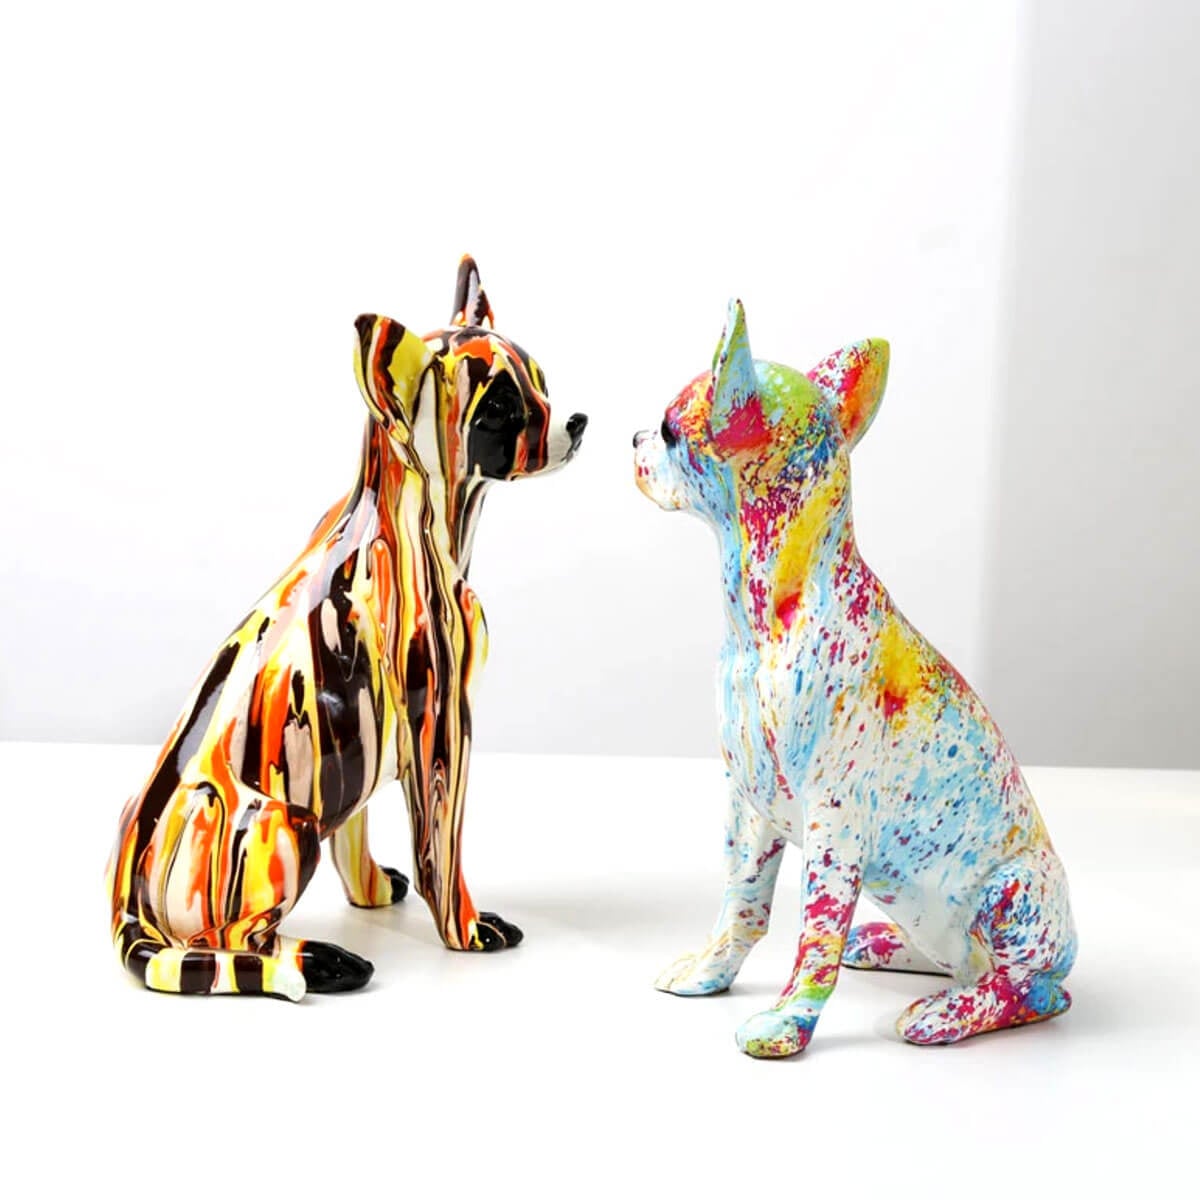 Chihuahua-Hundeskulptur-bunte Kunst-Statue